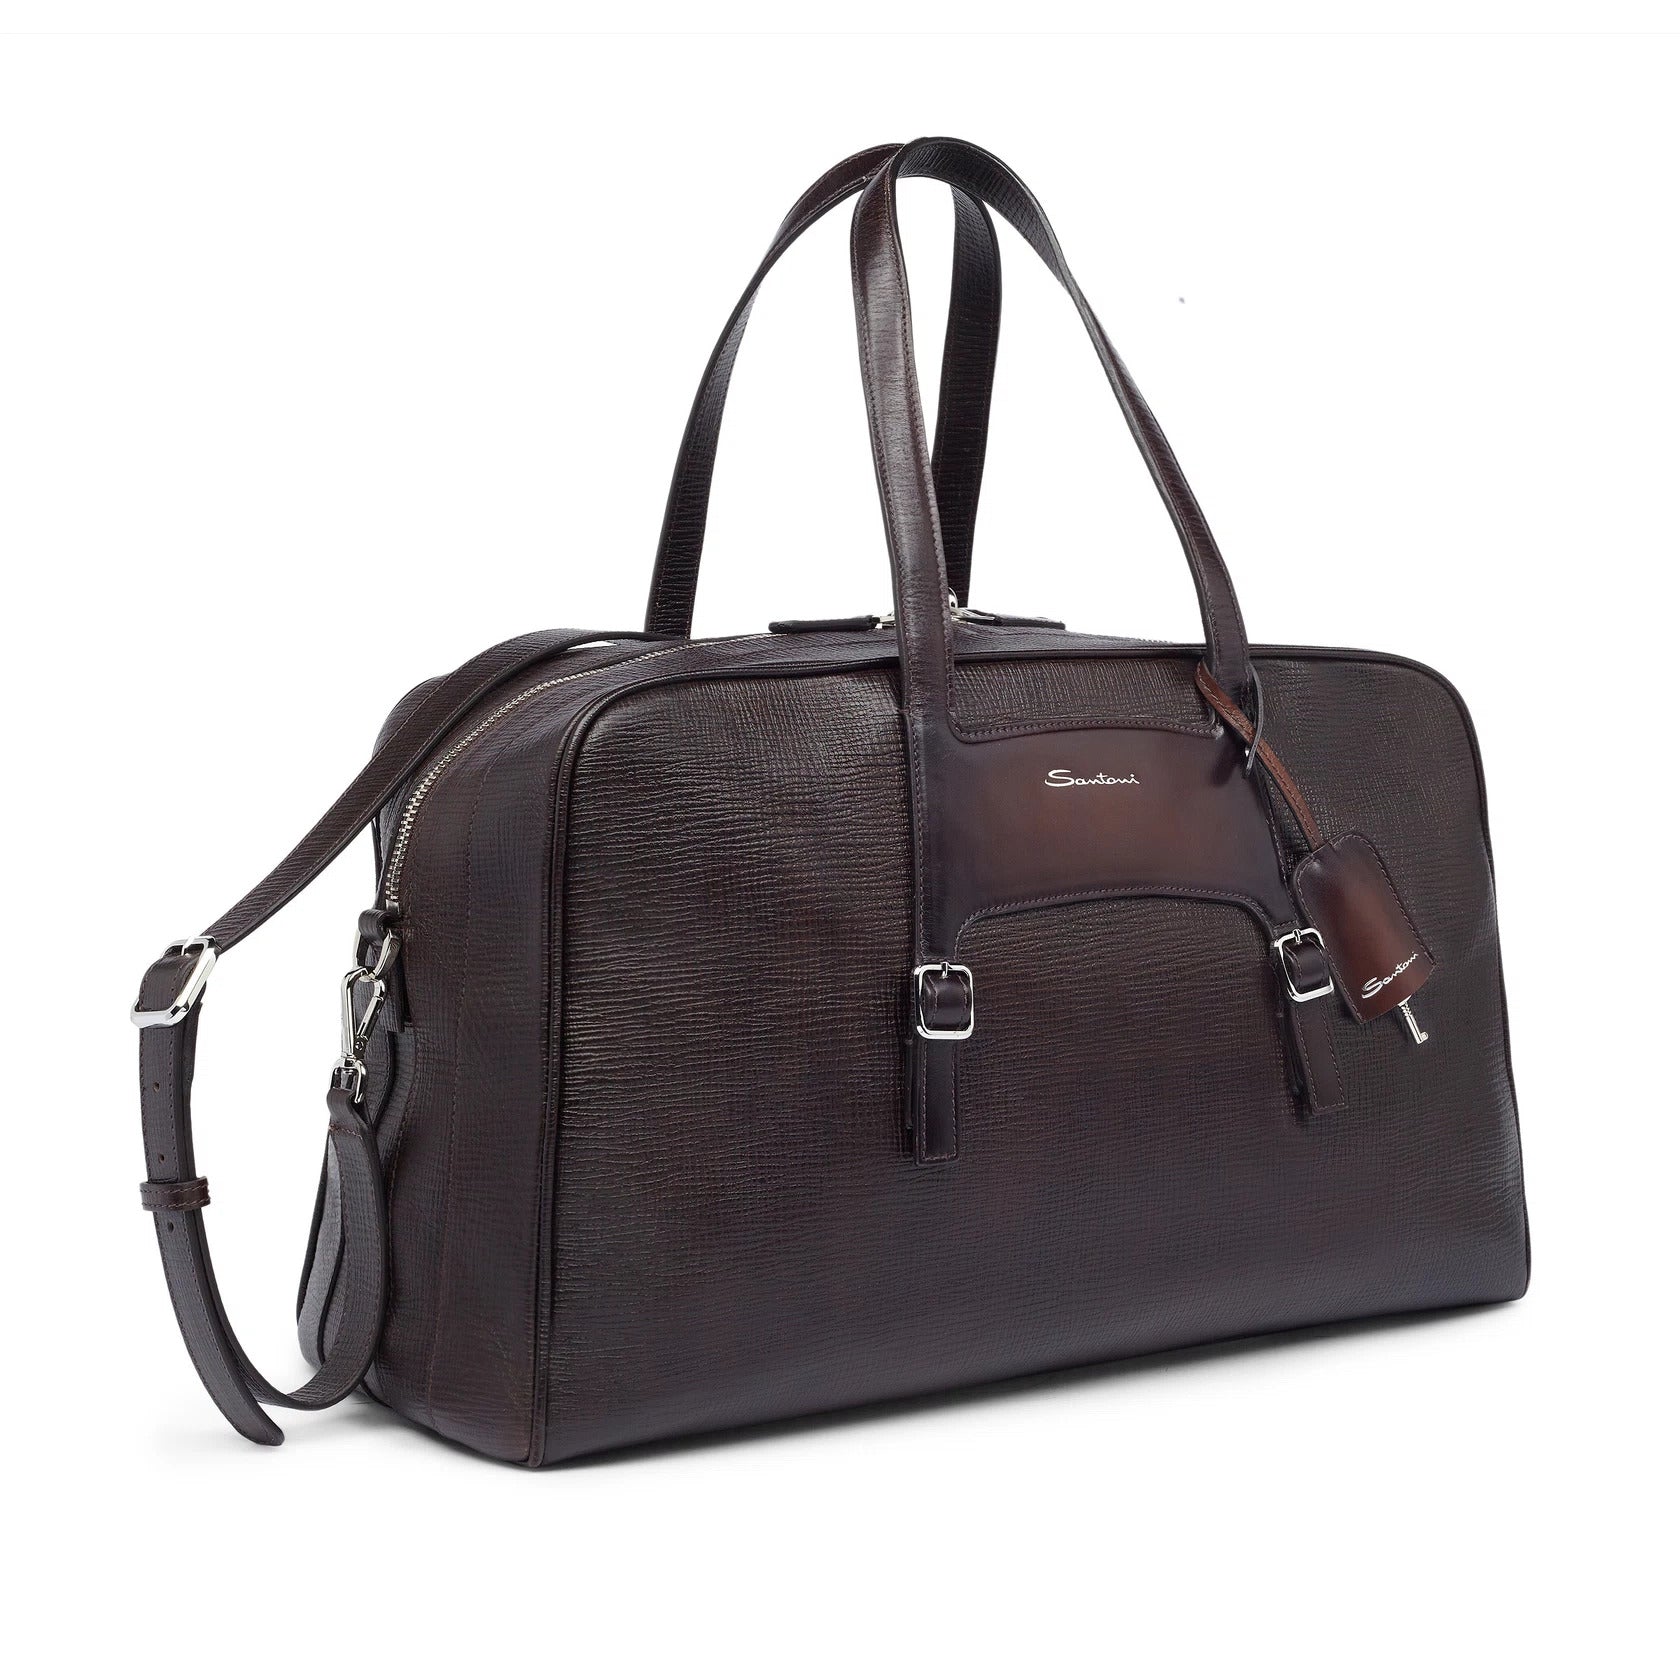 Printed leather travel bag